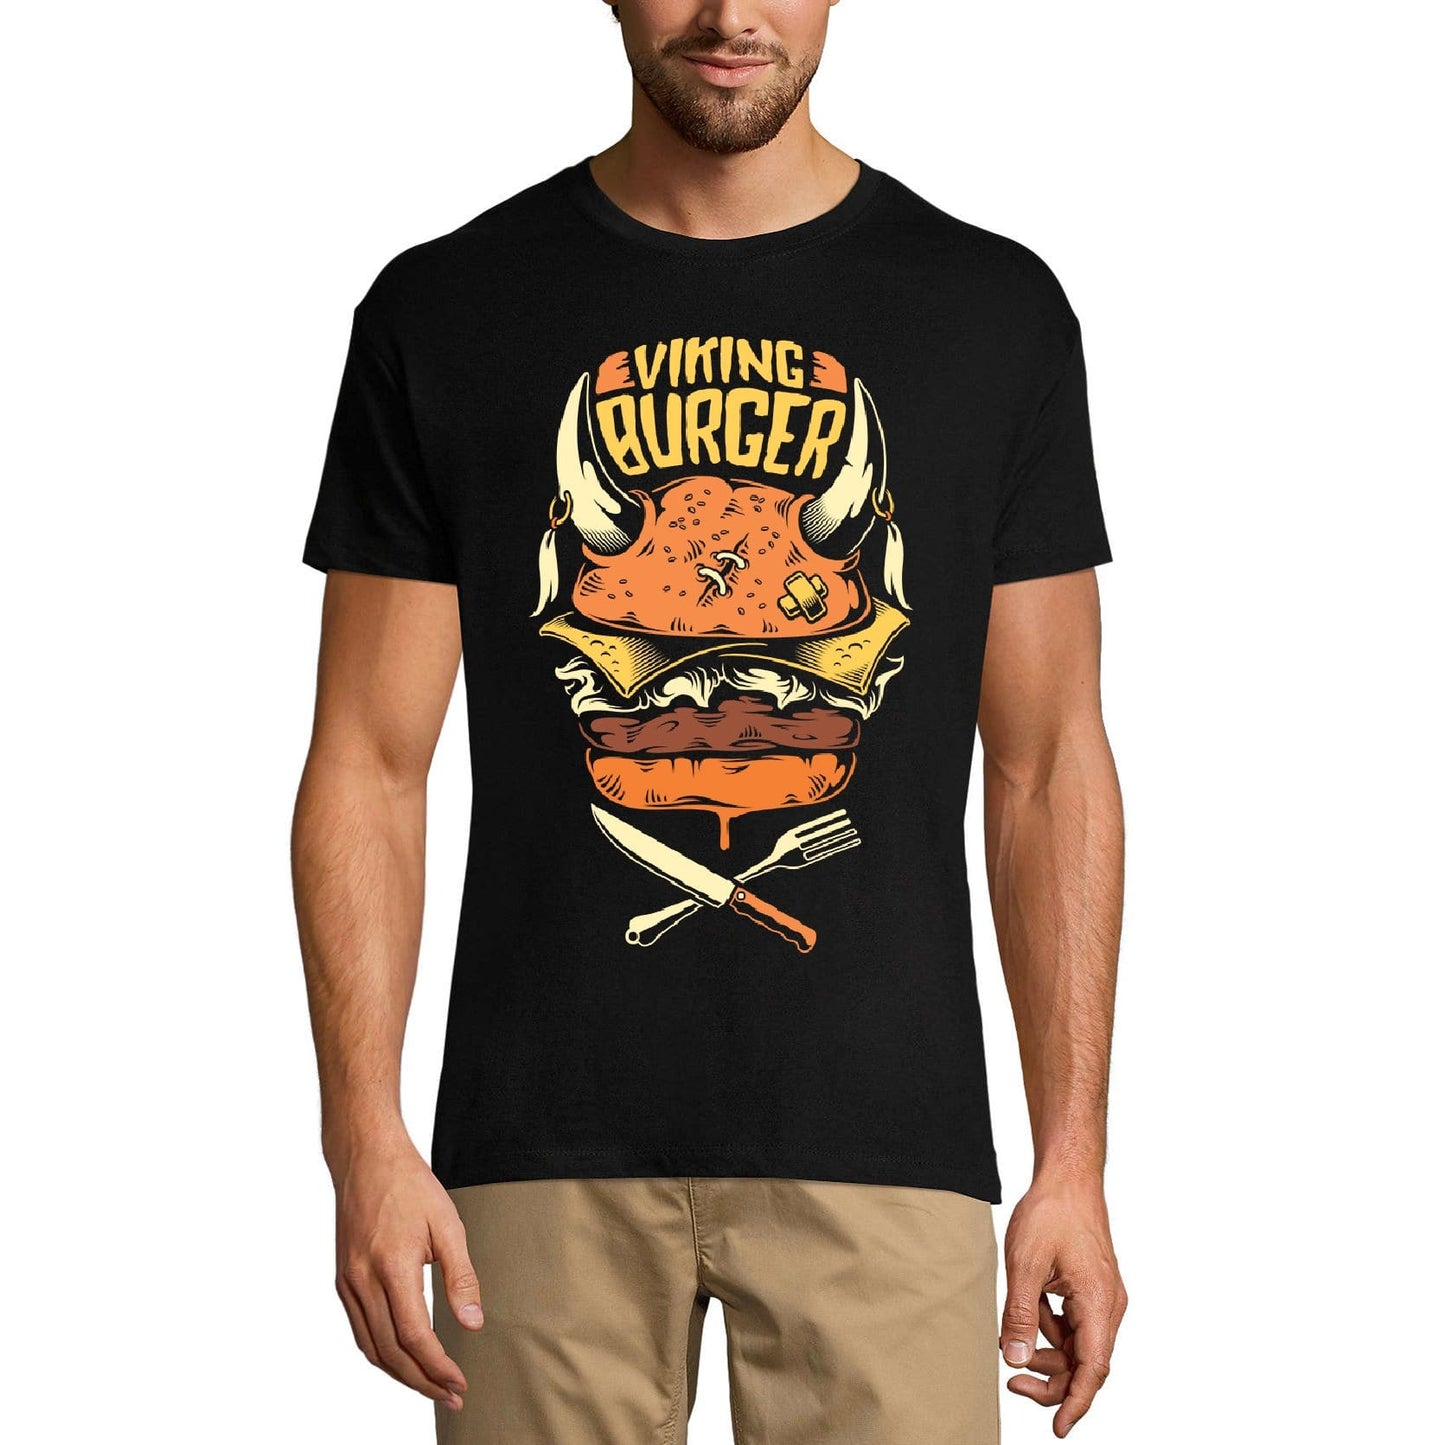 ULTRABASIC Men's T-Shirt Viking Burger - Short Sleeve Tee shirt